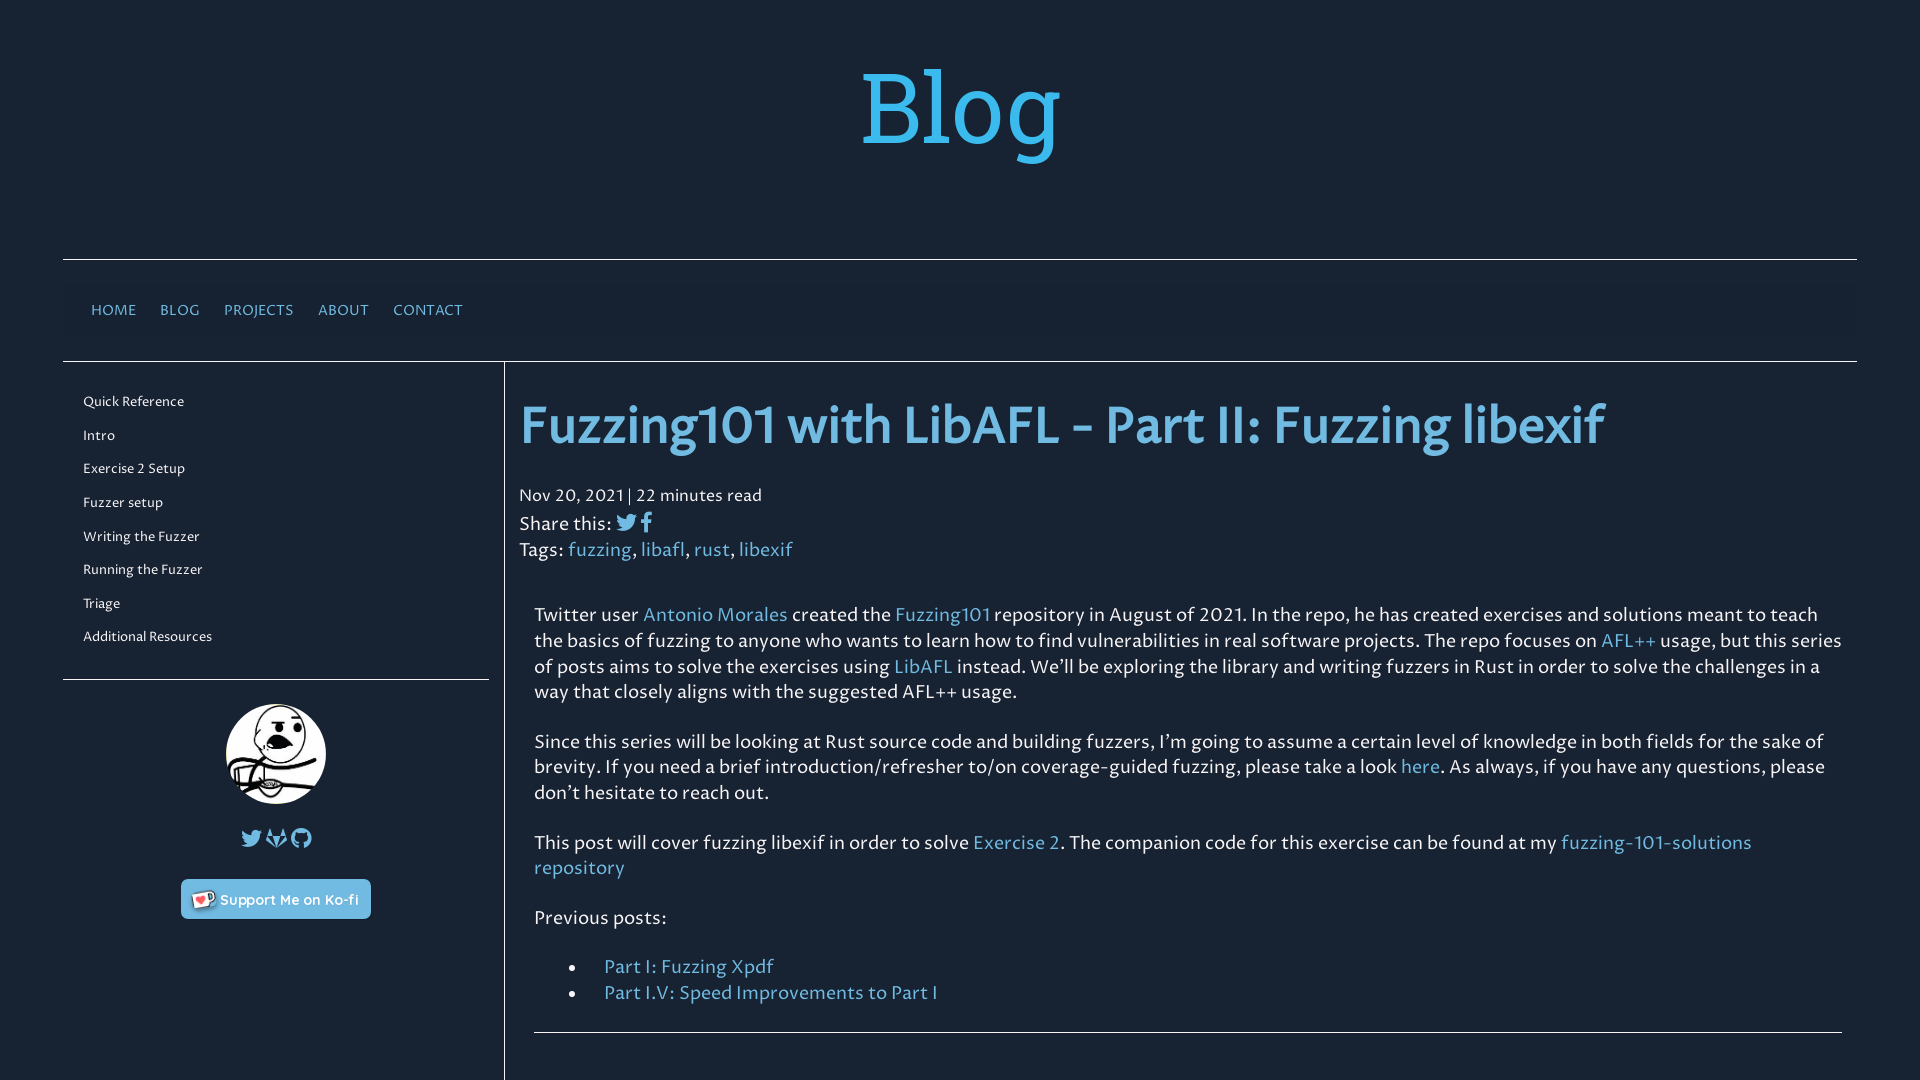 Fuzzing101 with LibAFL - Part II: Fuzzing libexif